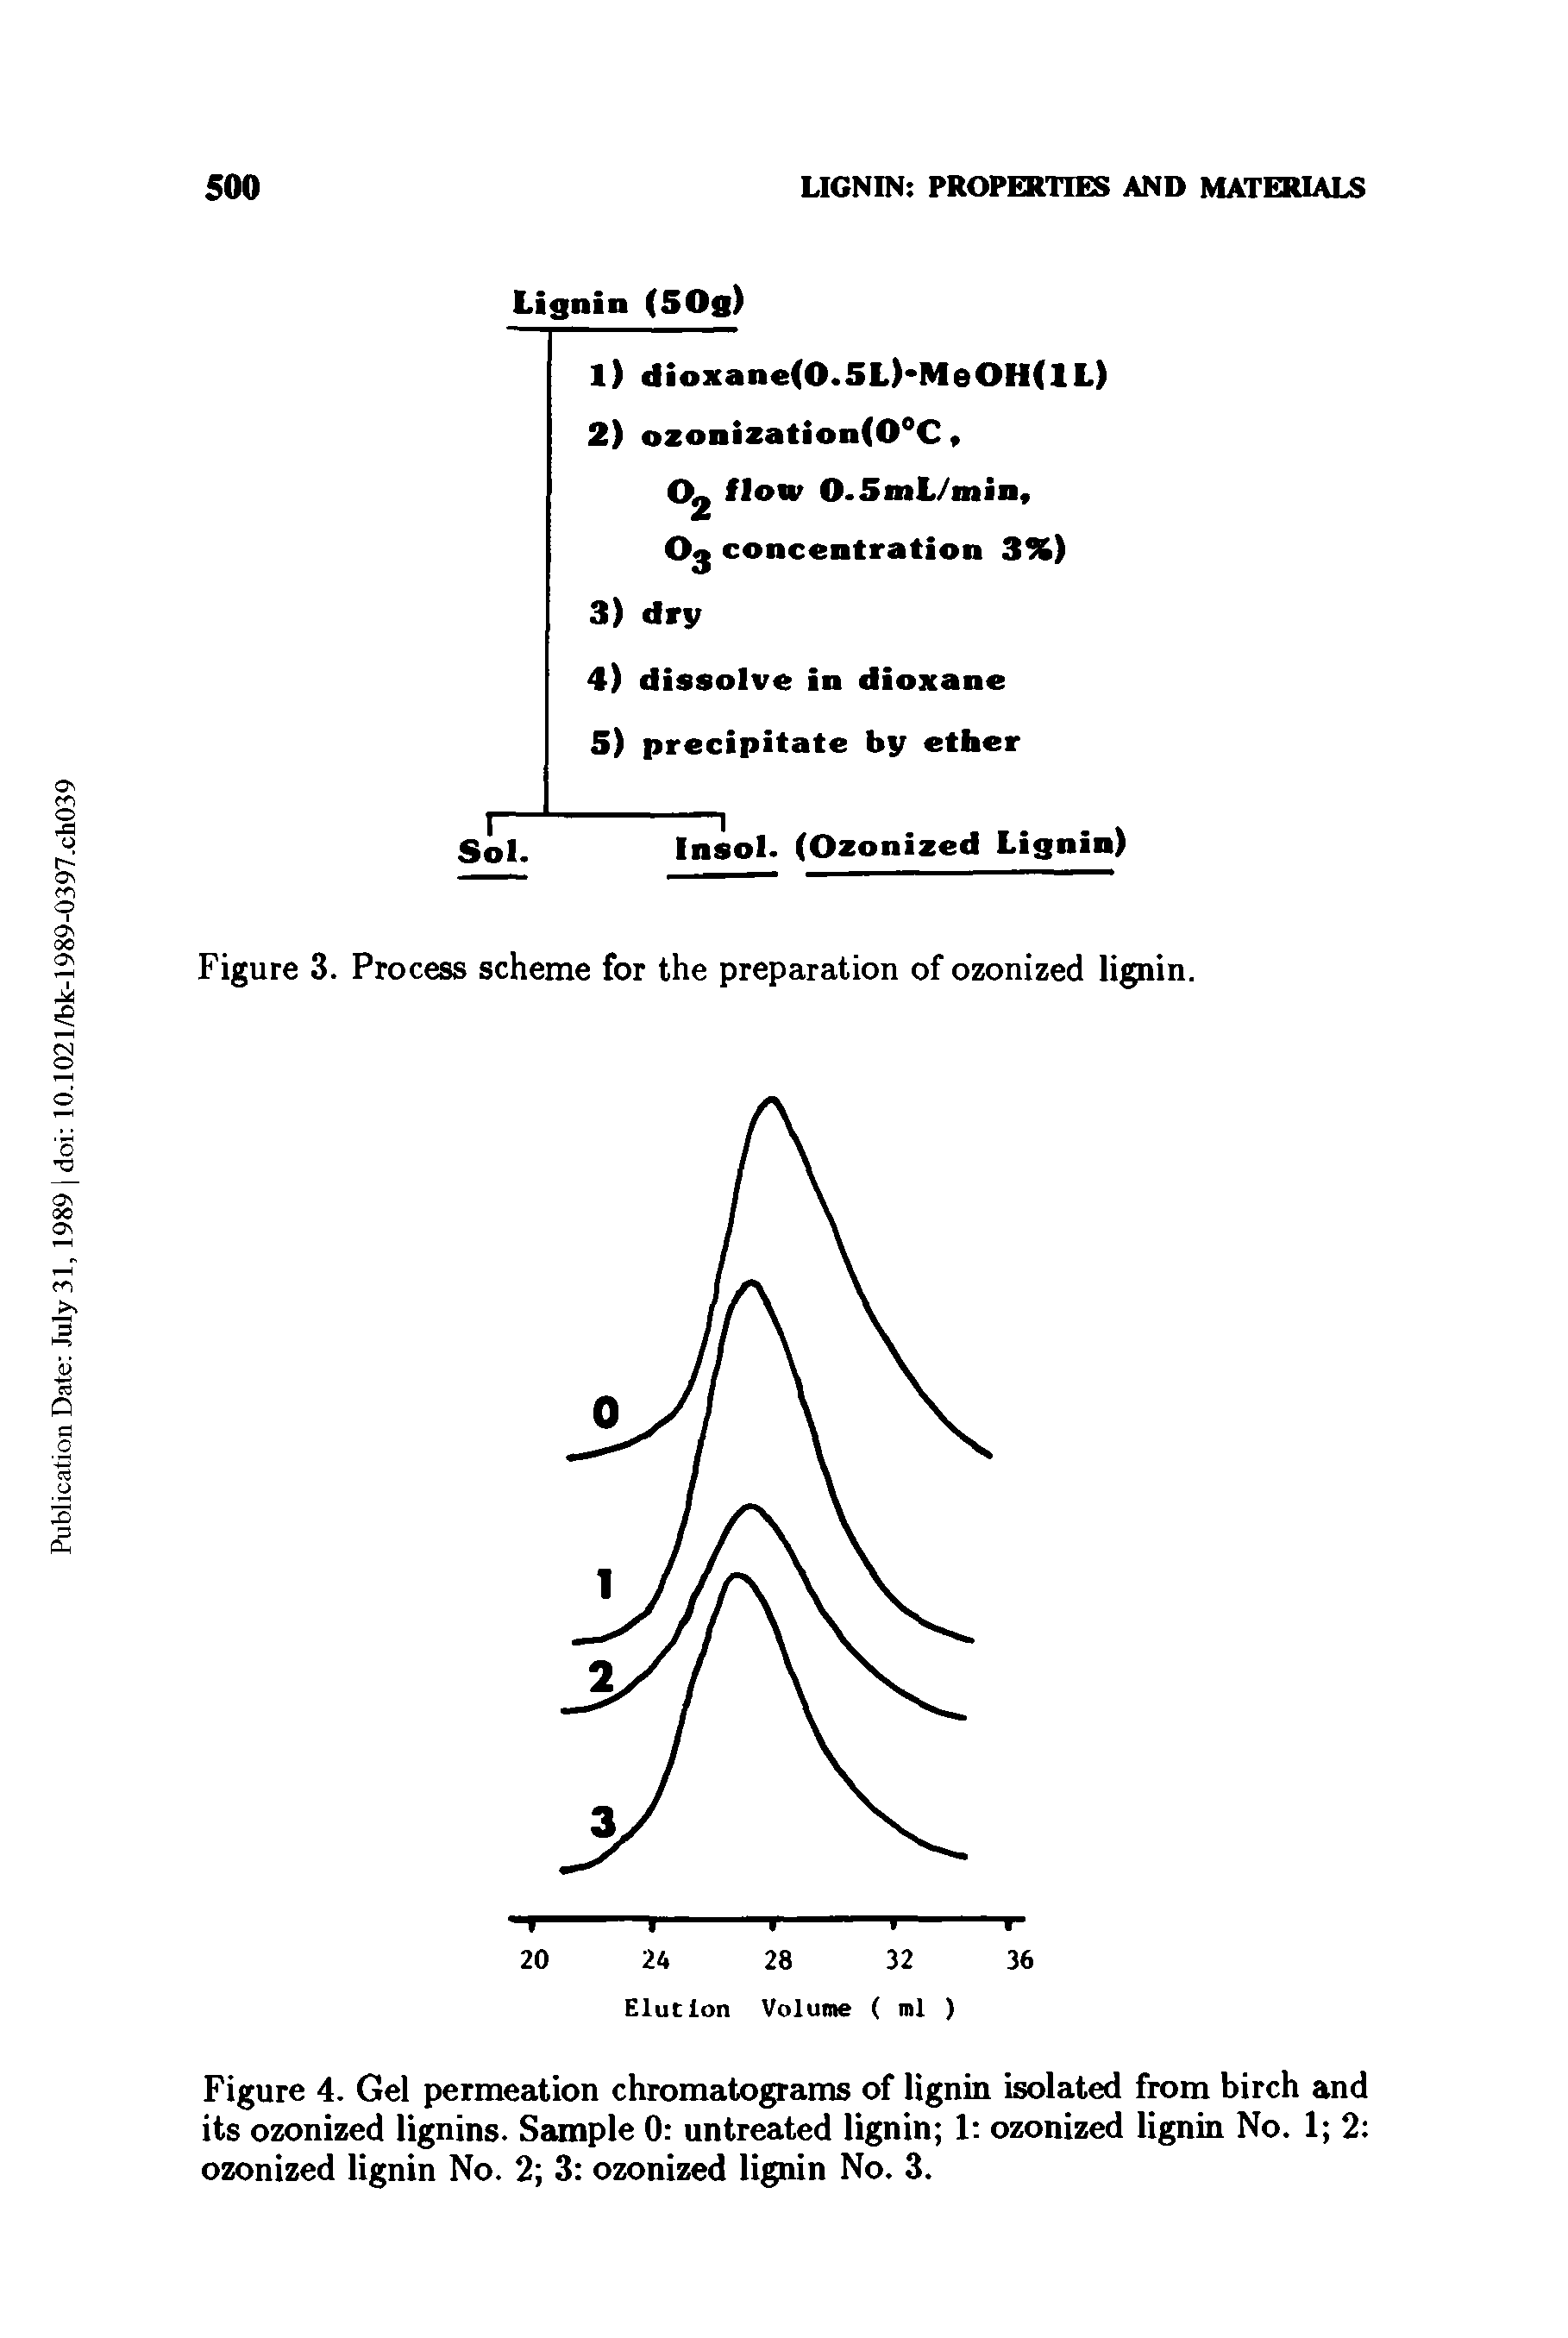 Figure 3. Process scheme for the preparation of ozonized lignin.